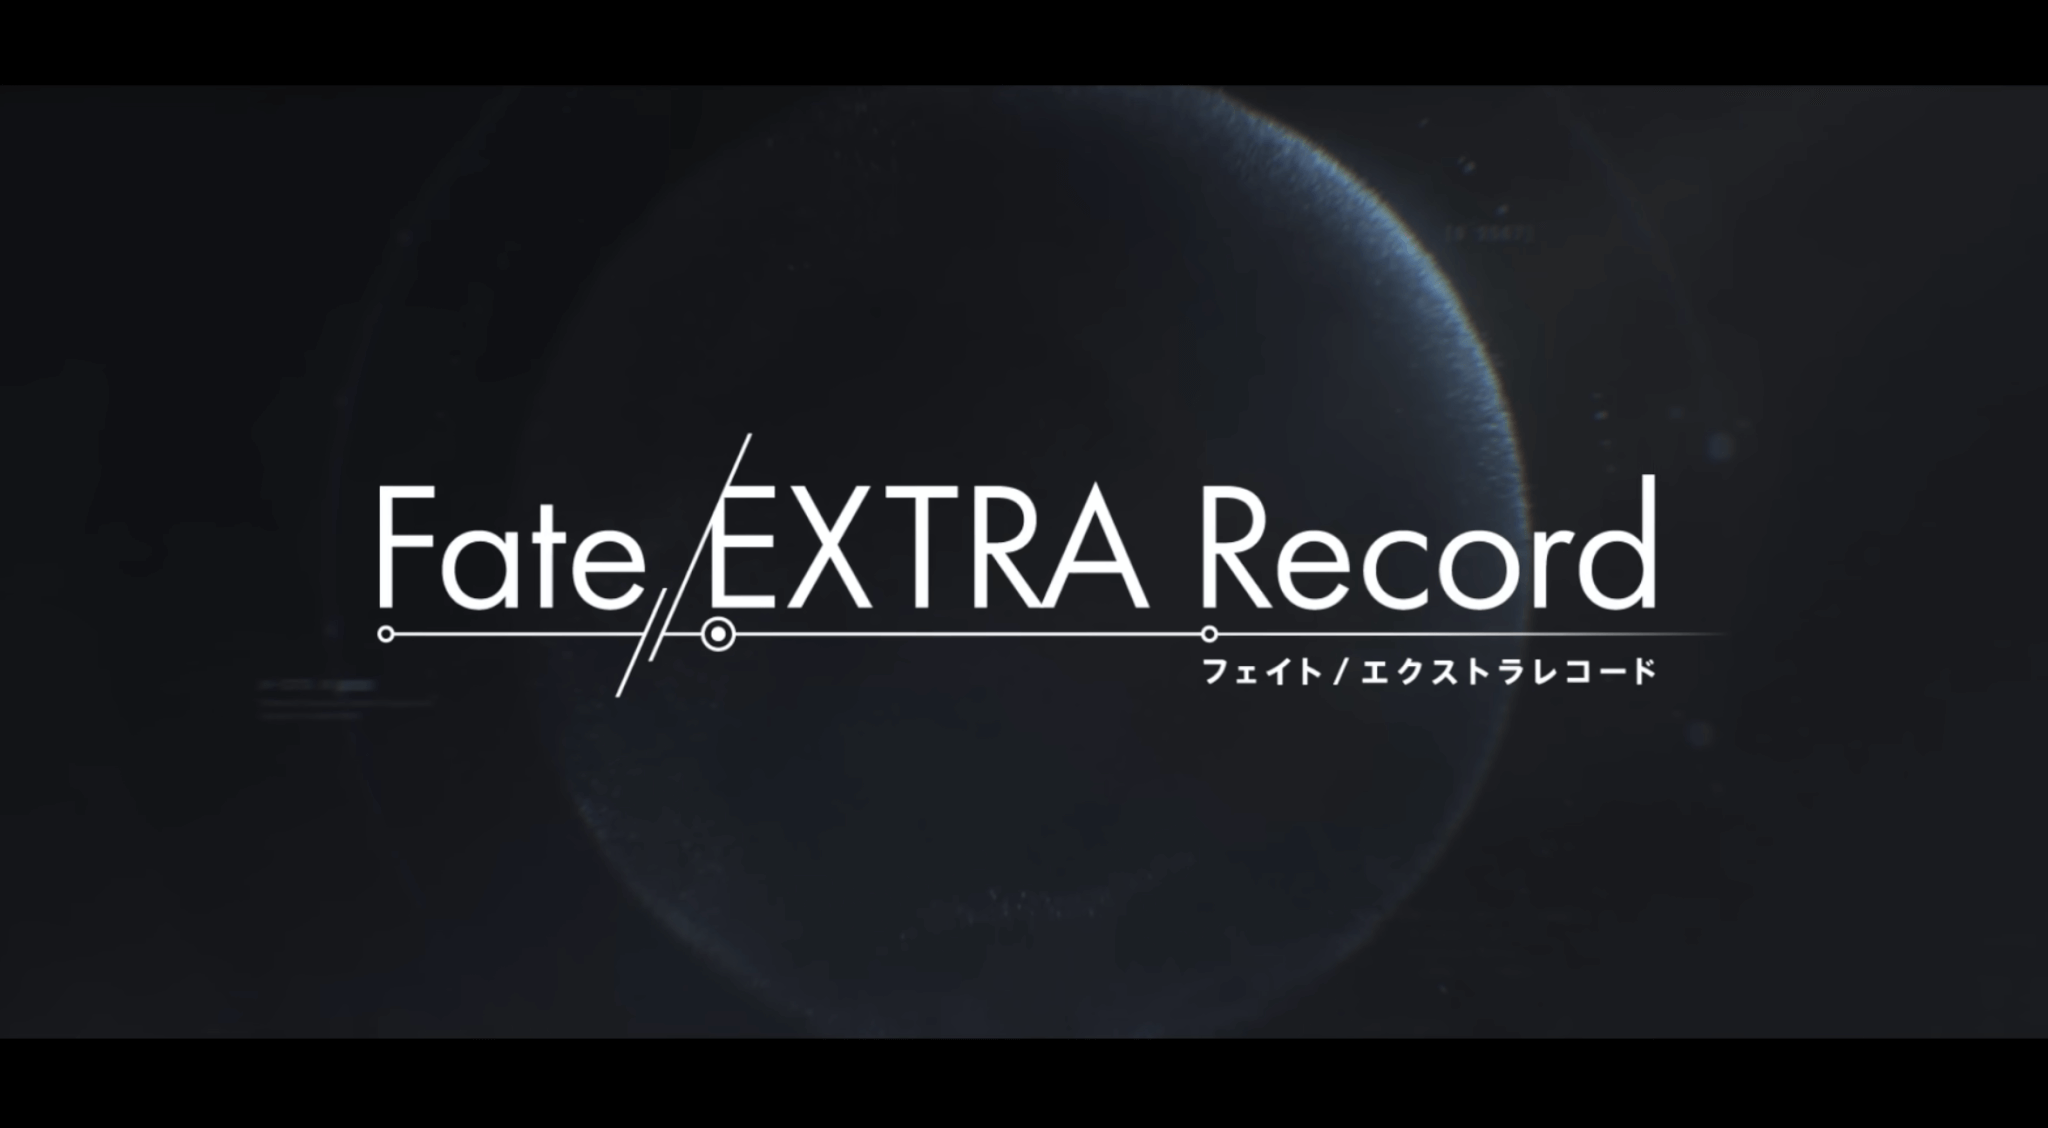 Fate/EXTRA Record 発売日